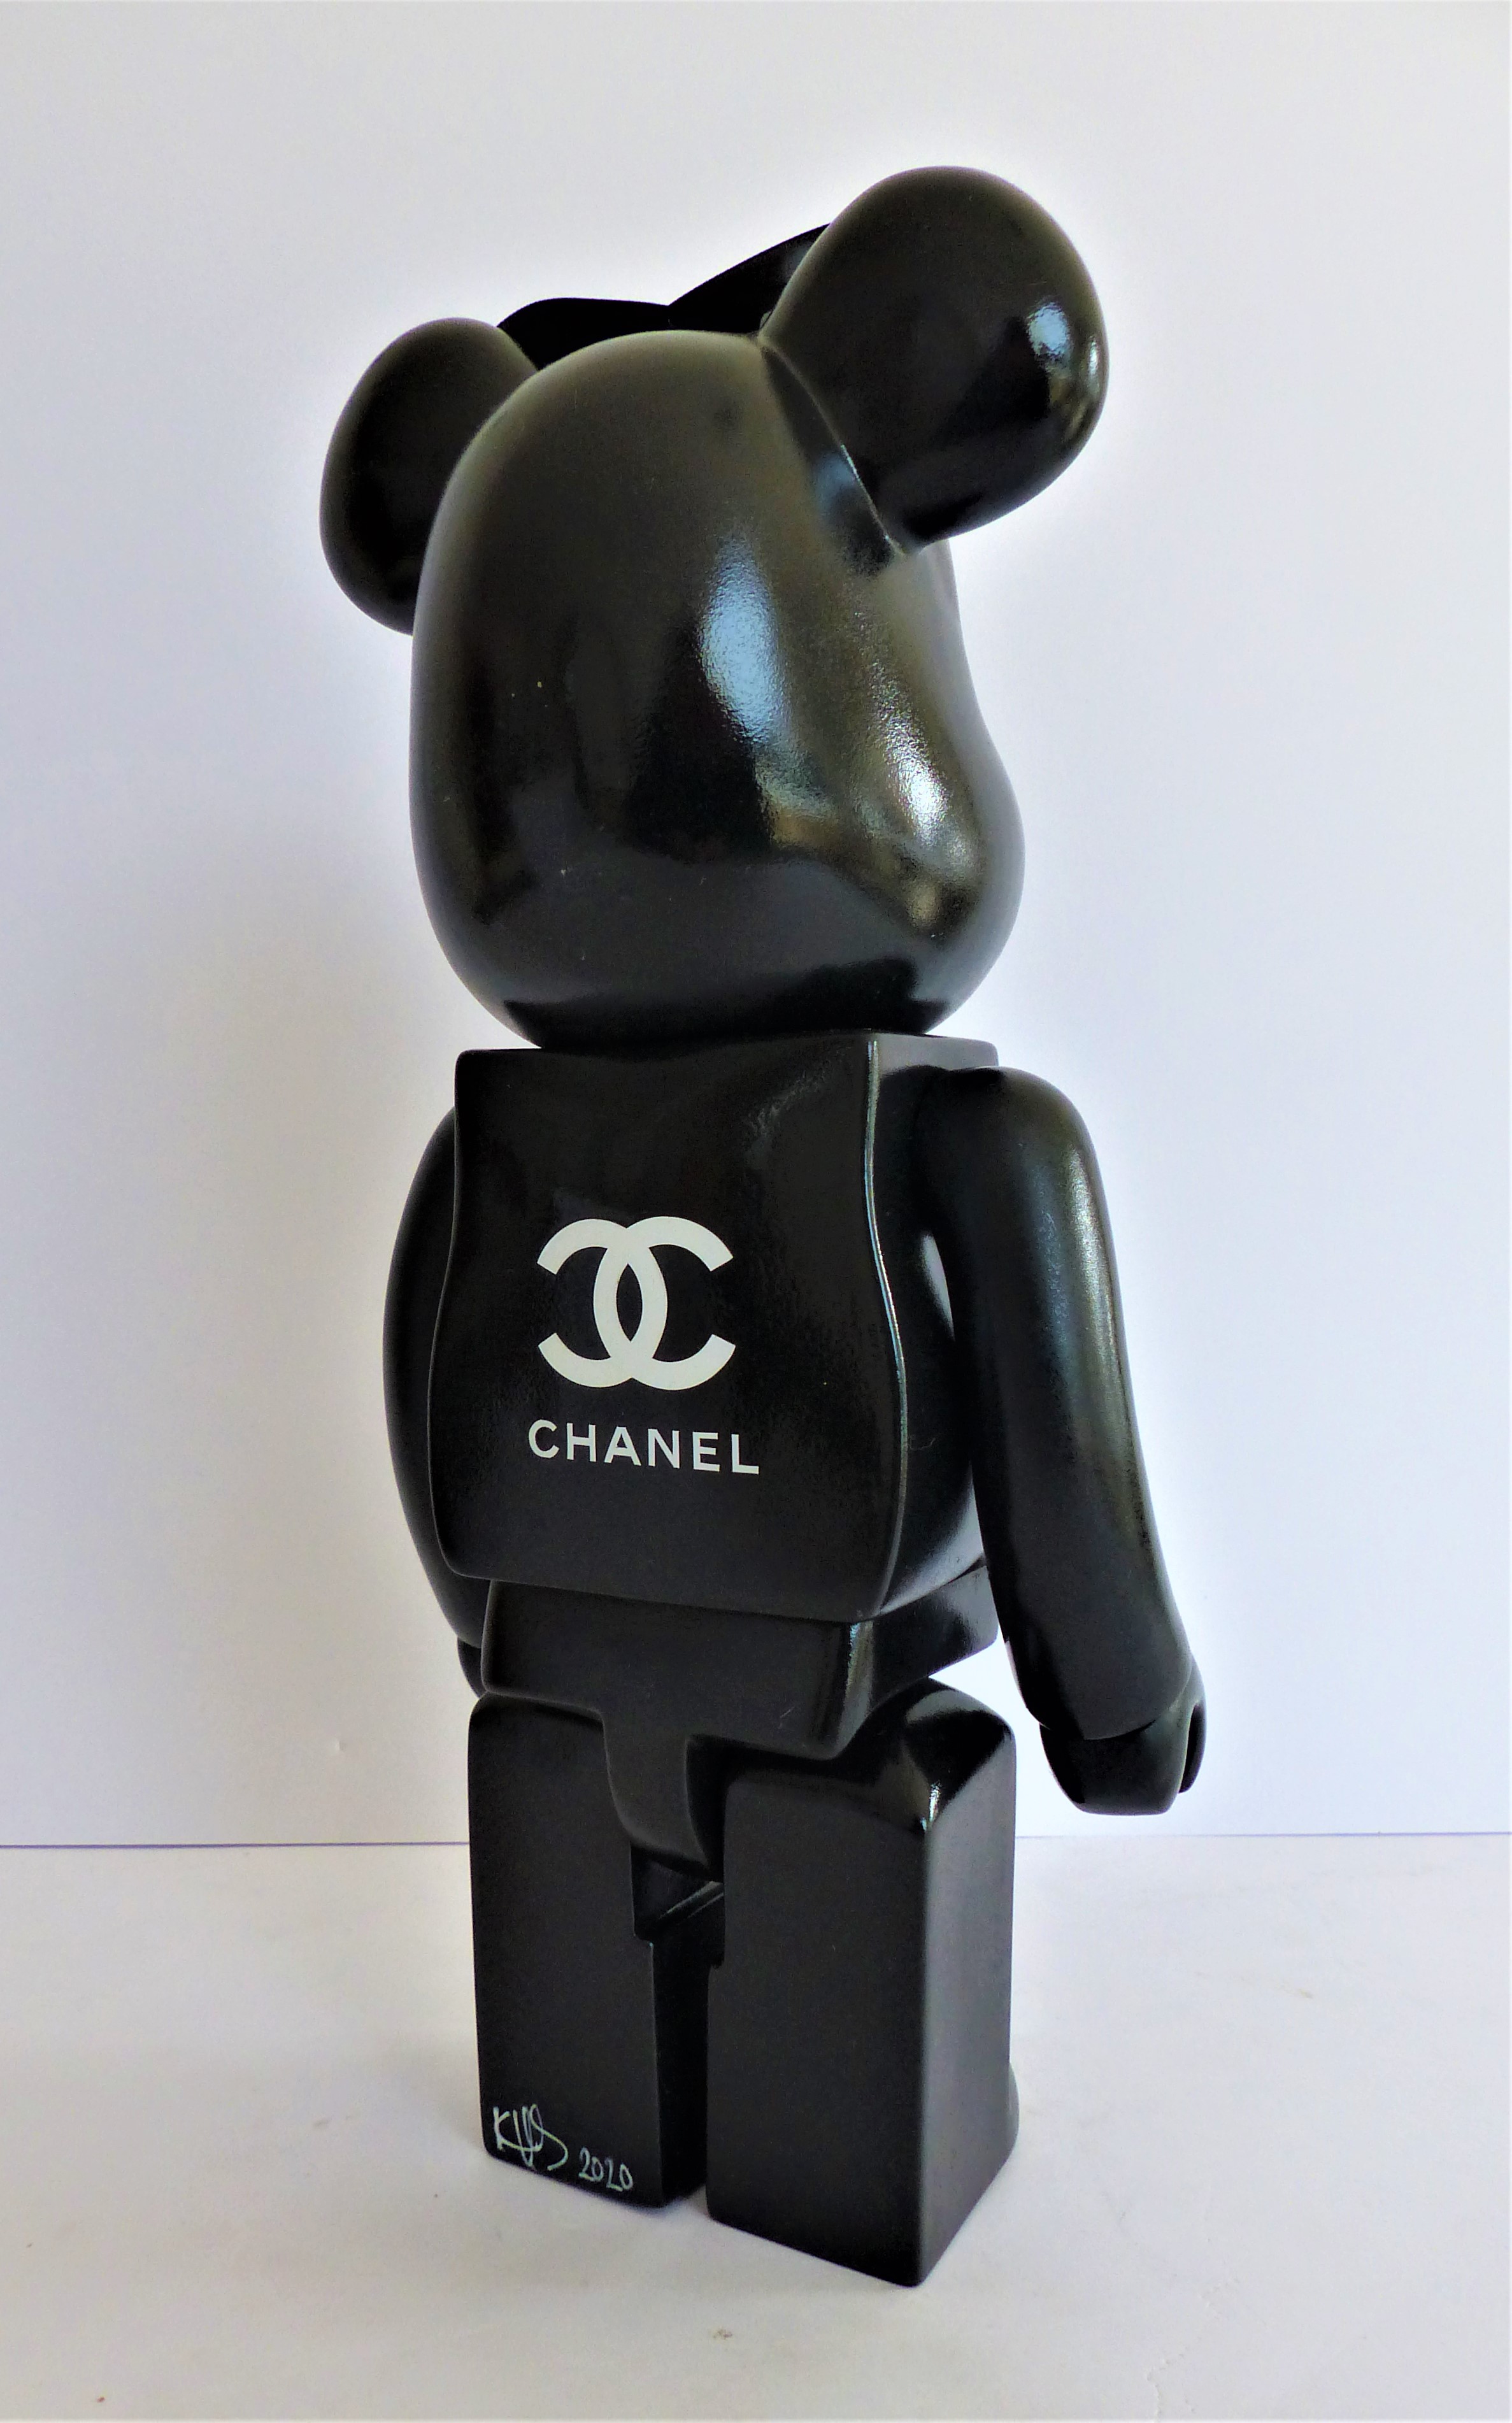 Contemporary Art - Mixed media on resin - Bearbrick Chanel Black